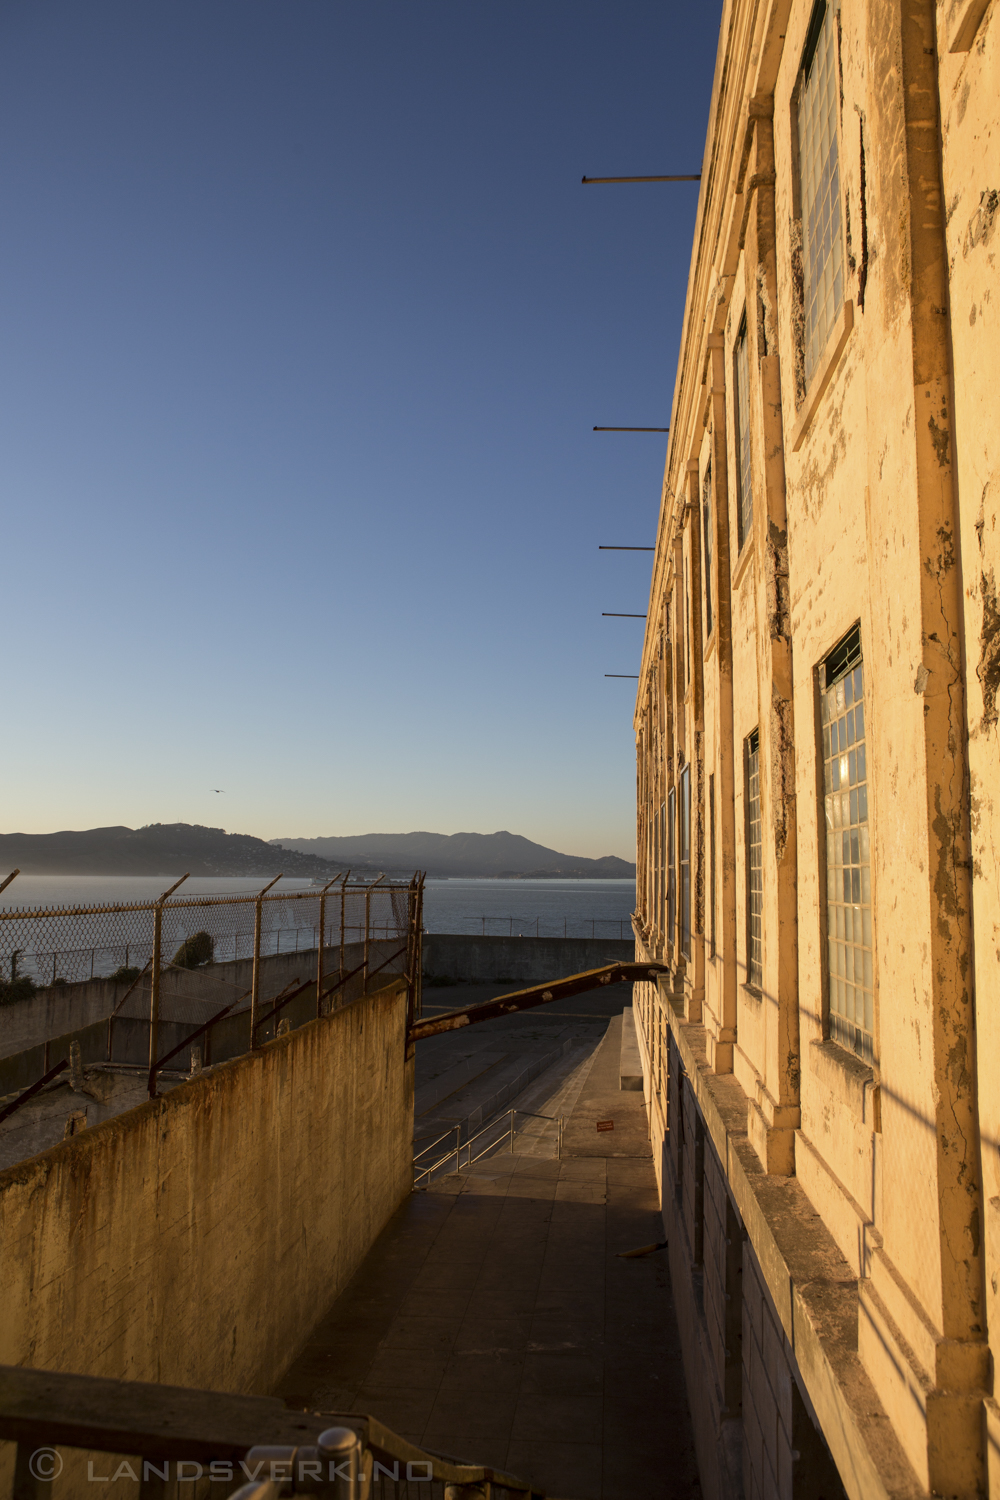 Alcatraz. San Francisco, California. 

(Canon EOS 5D Mark III / Canon EF 24-70mm f/2.8 L USM)